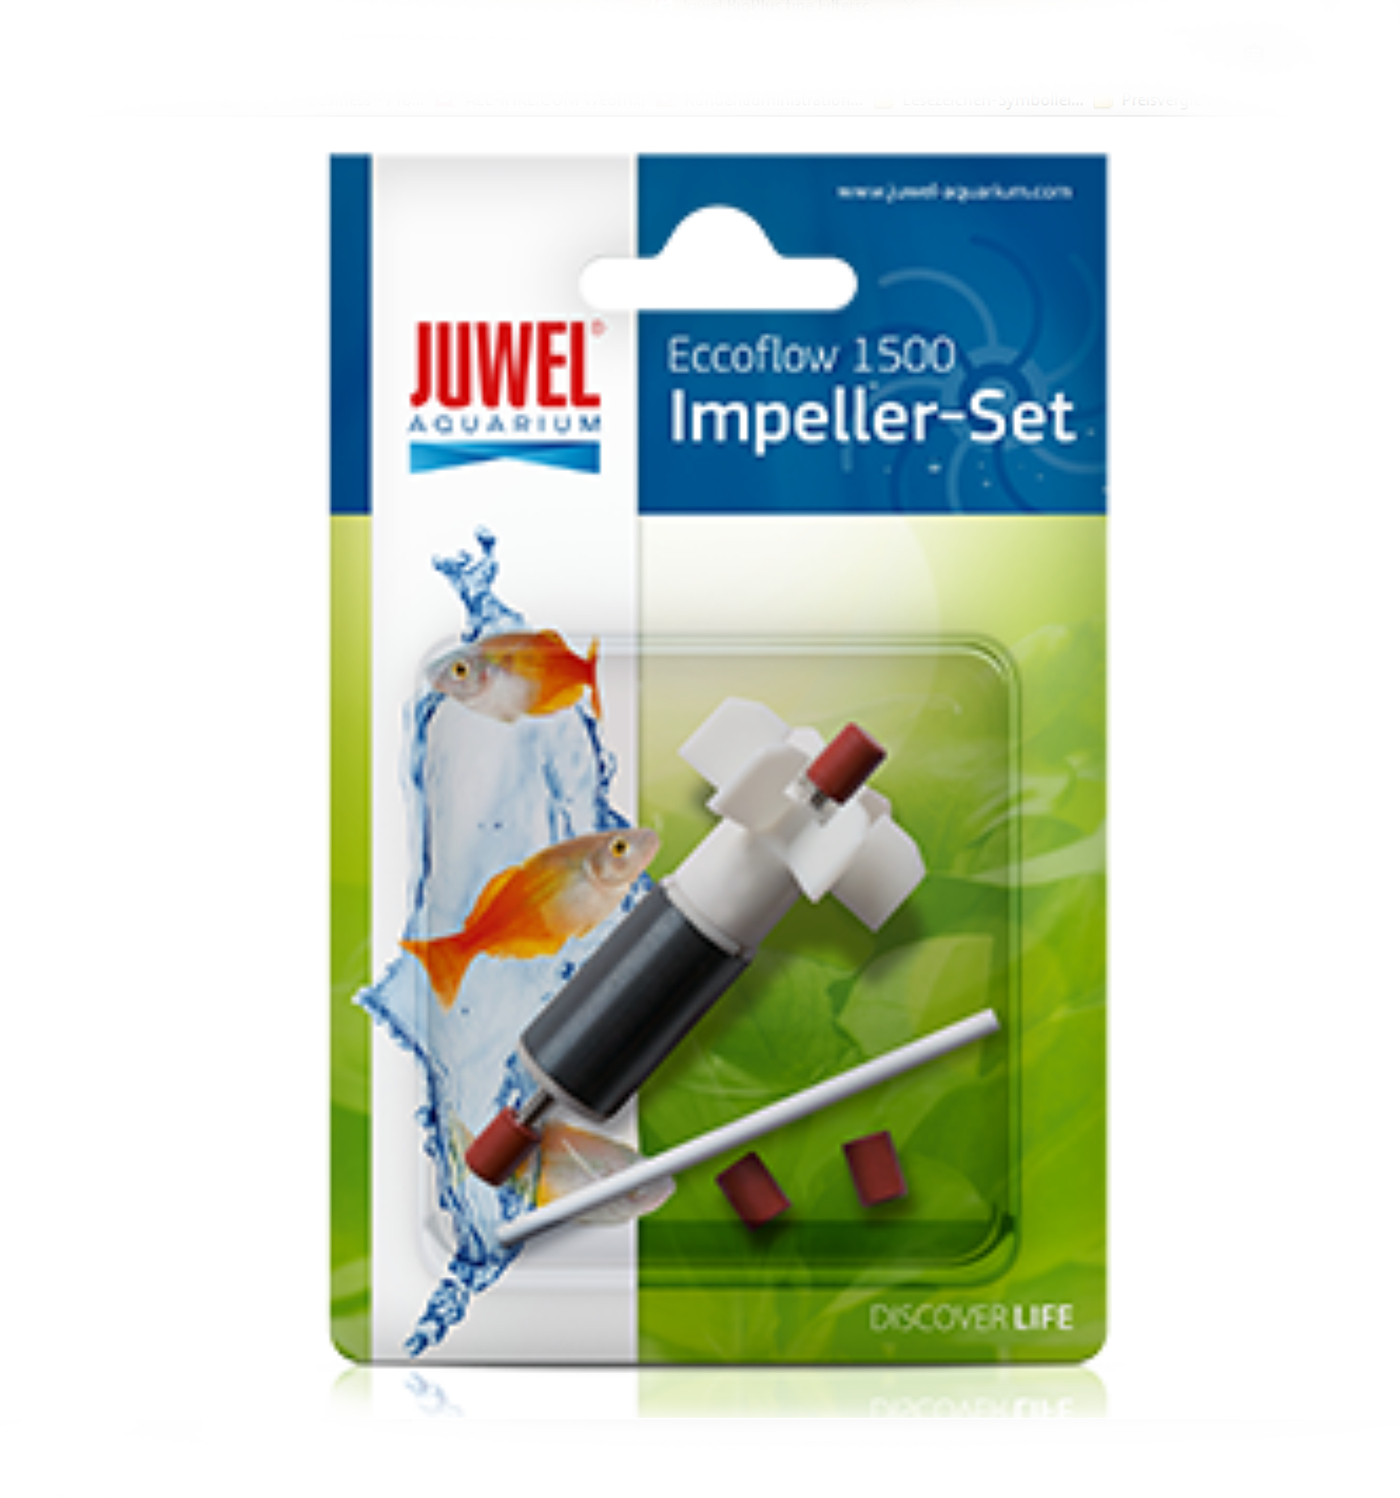 Juwel Impeller Set Eccoflow 1500 